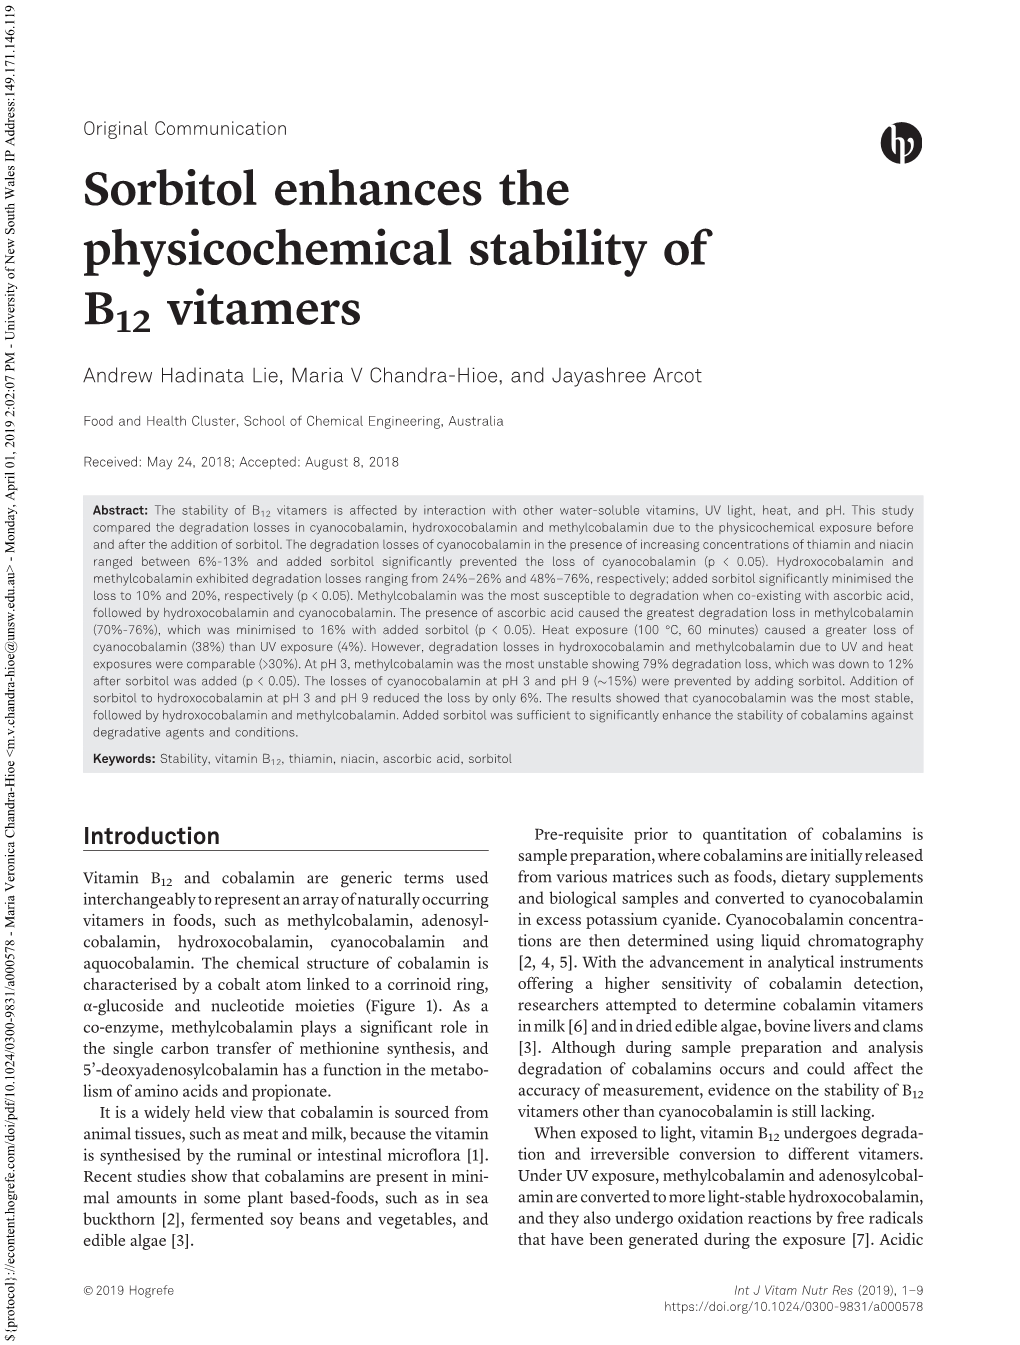 Sorbitol Enhances the Physicochemical Stability of B12